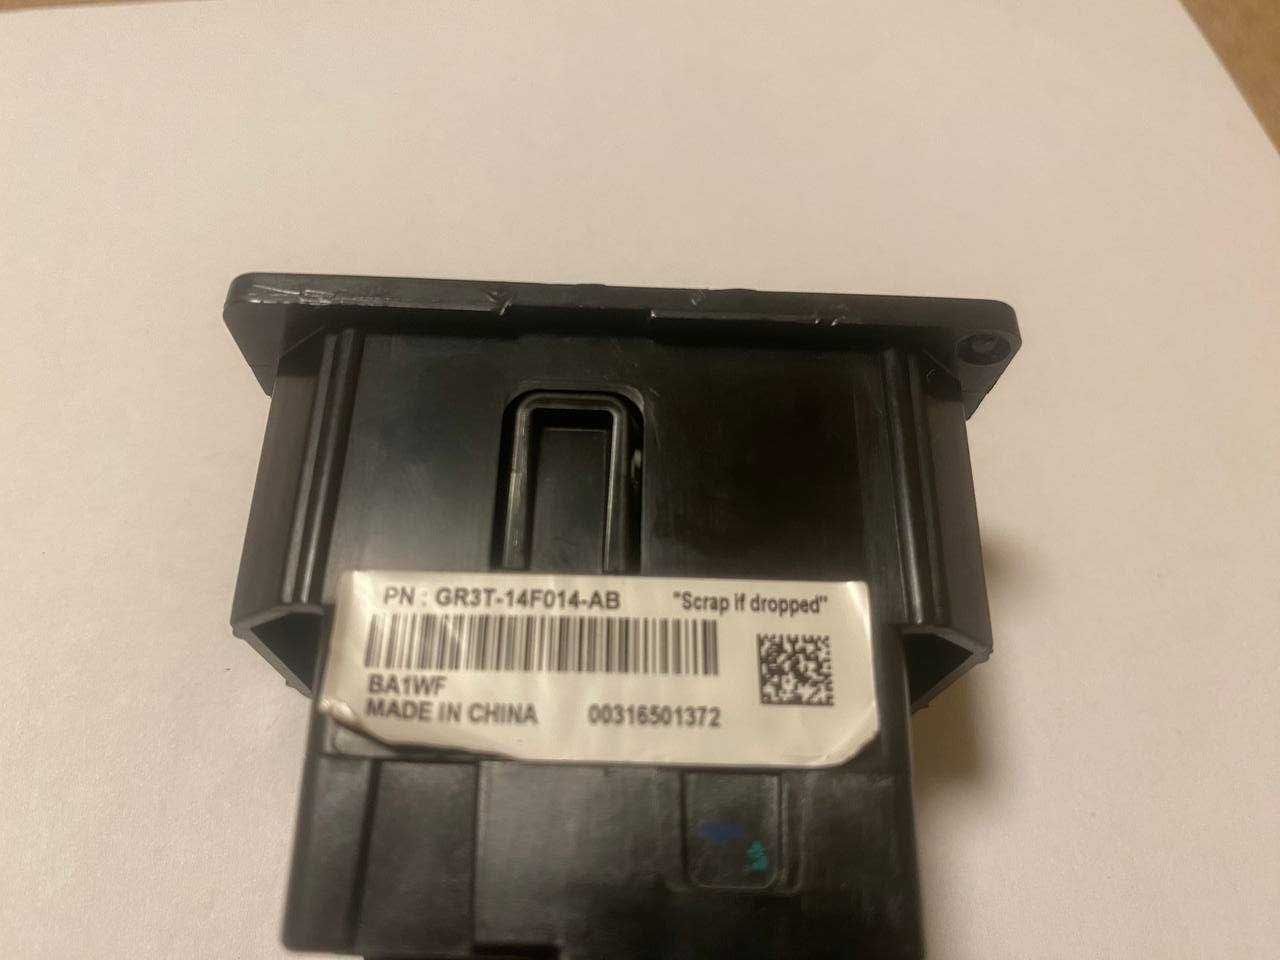 Ford USB Outlet Media Connector Plug GR3T-14F014-AB